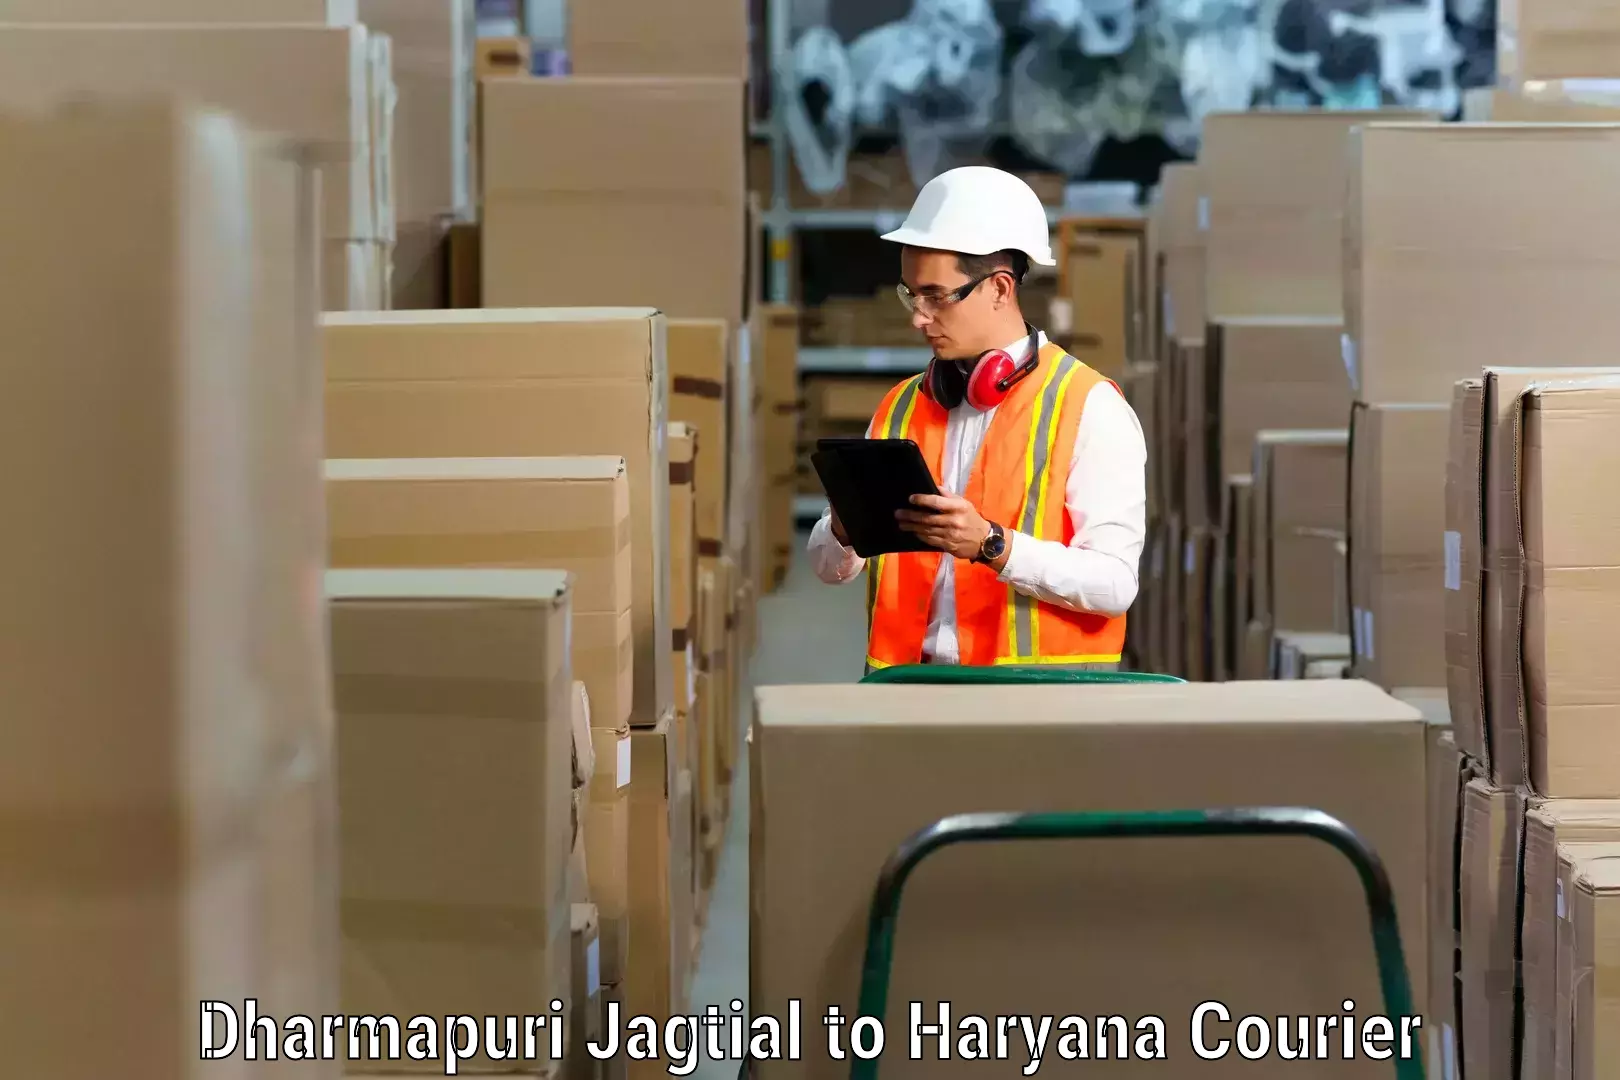 Quality moving and storage in Dharmapuri Jagtial to Charkhi Dadri